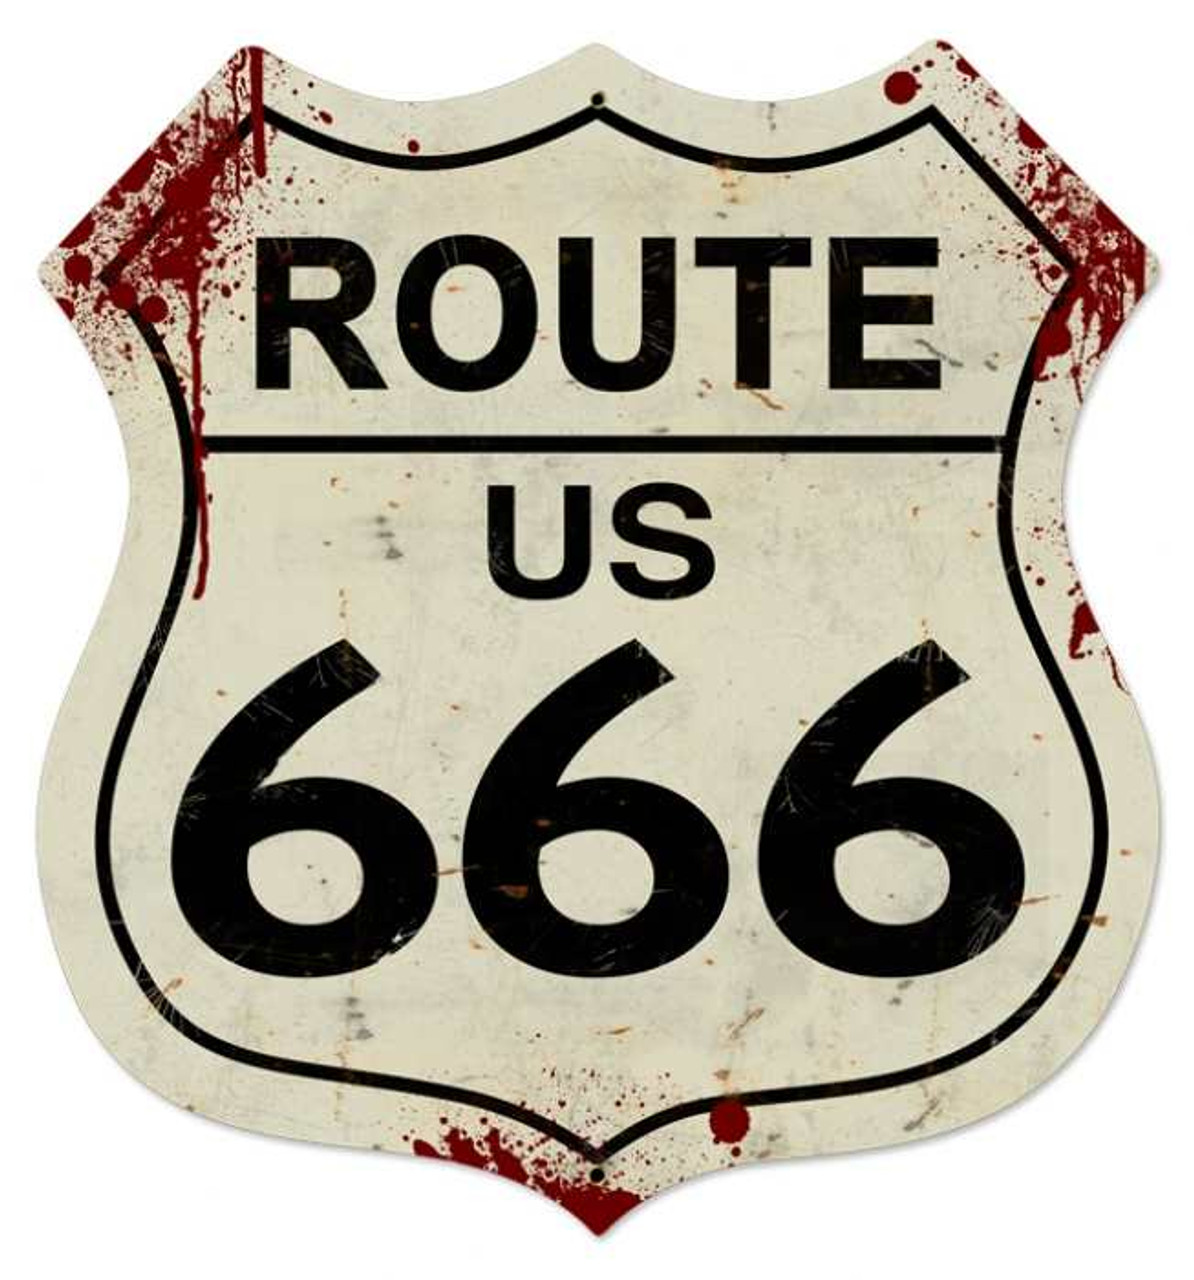 Retro Route 666 Shield Metal Sign 28 x 28 Inches